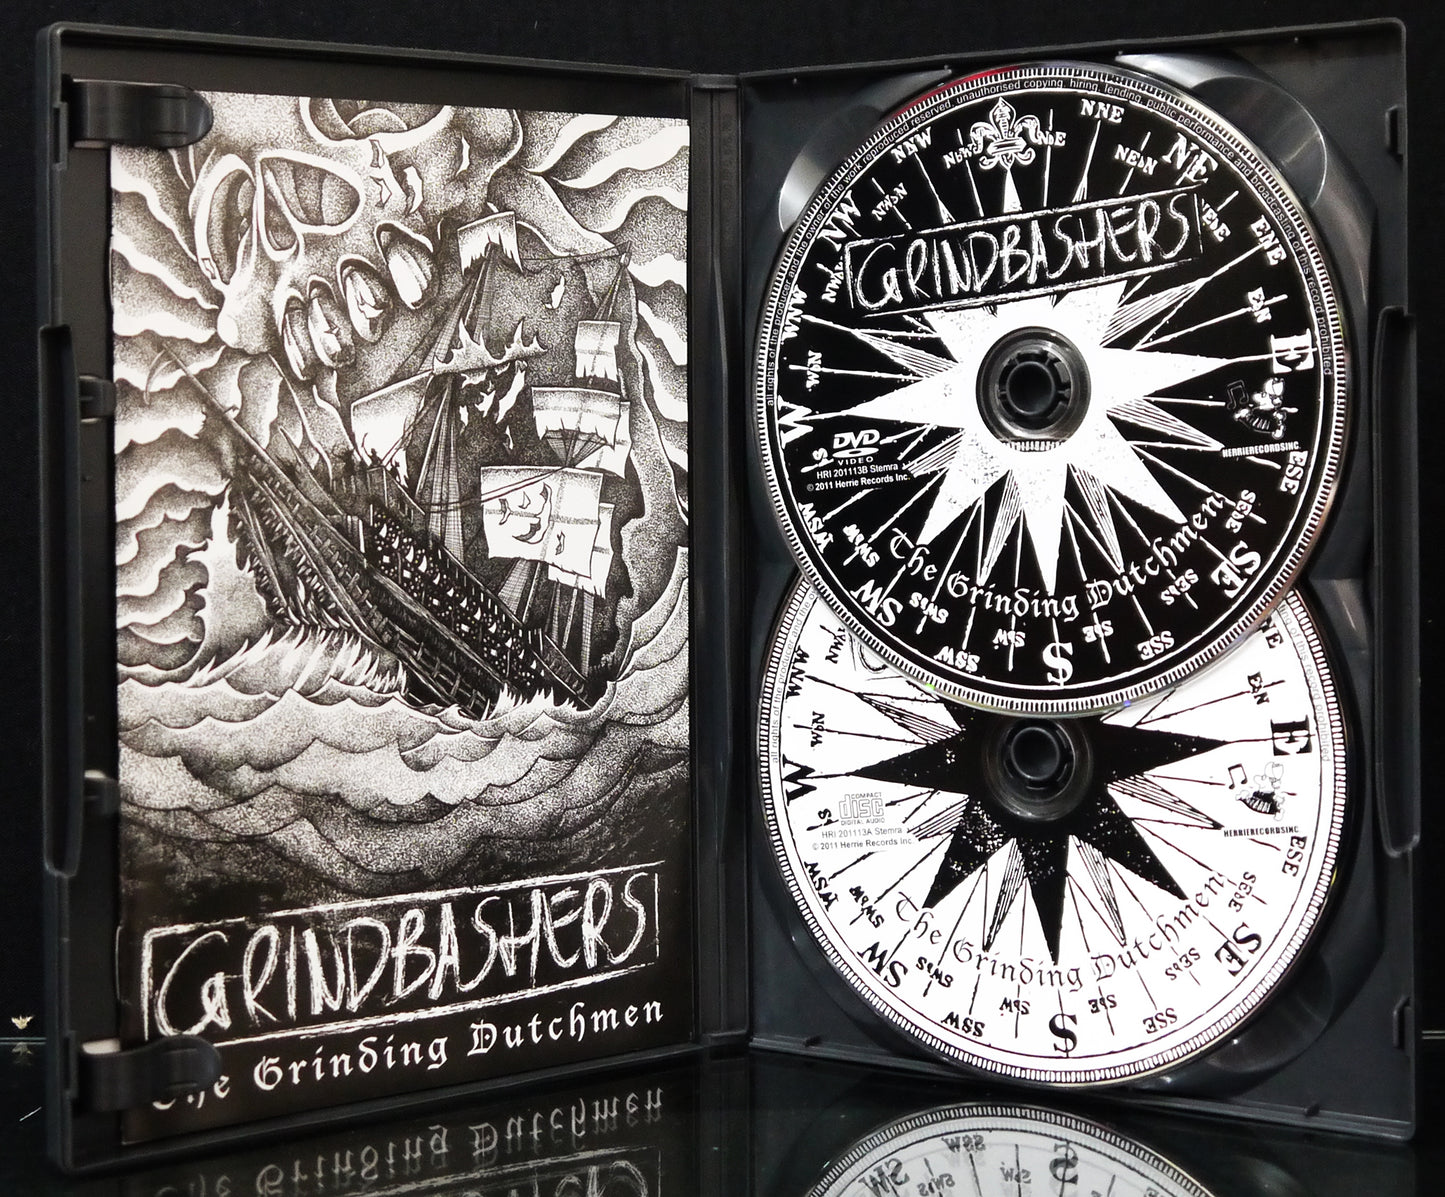 GRINDBASHERS - The Grinding Dutchmen CD+DVD